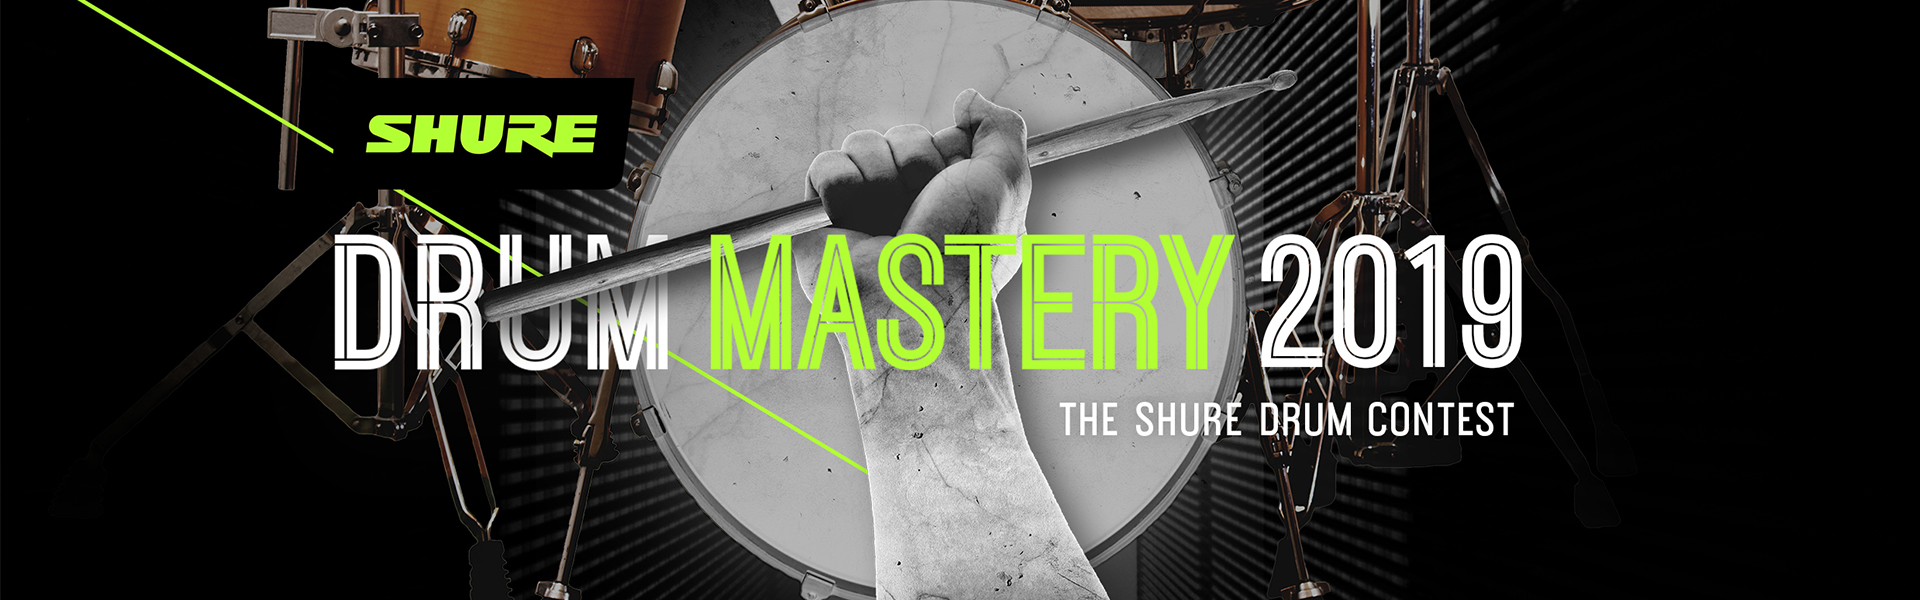 Shure Drum Mastery Banner